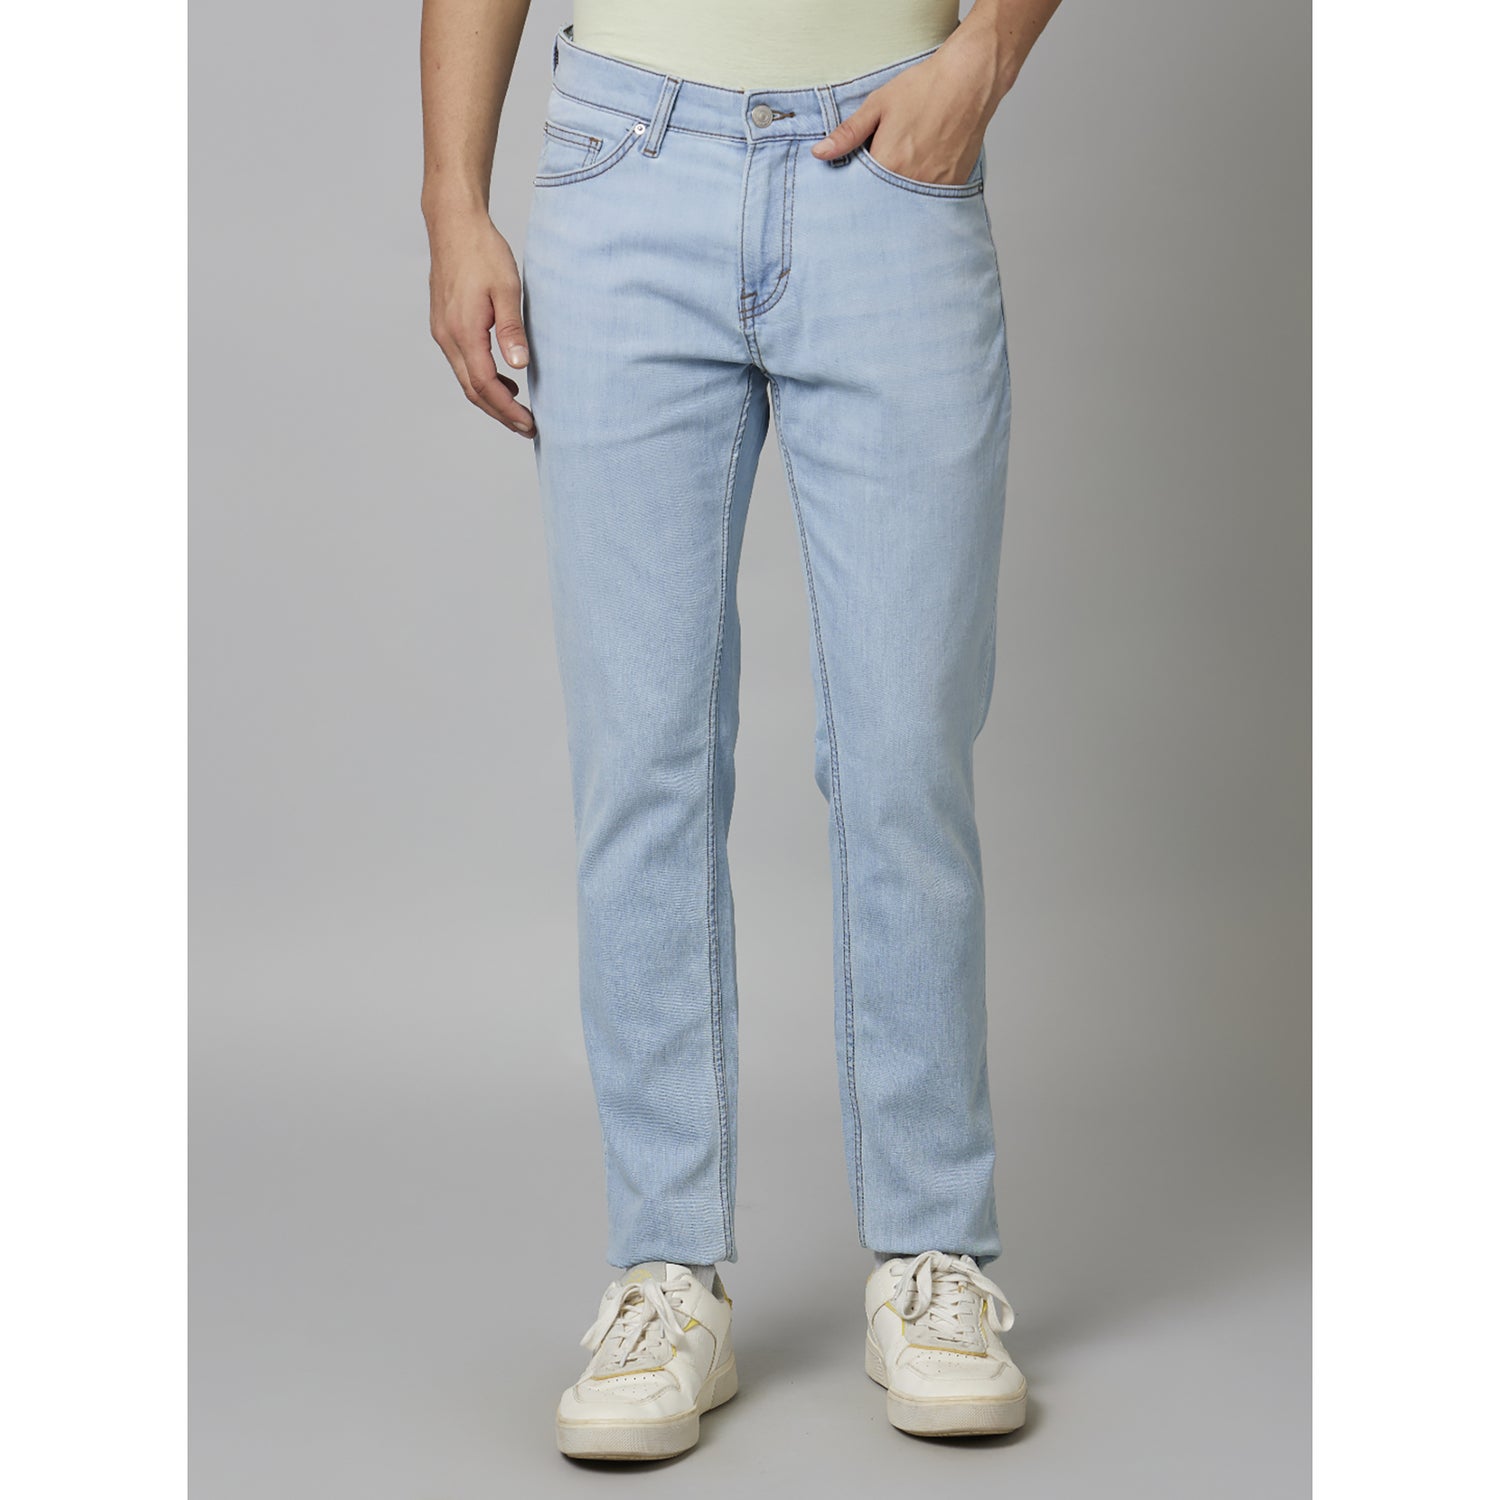 Light Blue Solid Cotton Poly Blend Jeans (DORESPIRE)